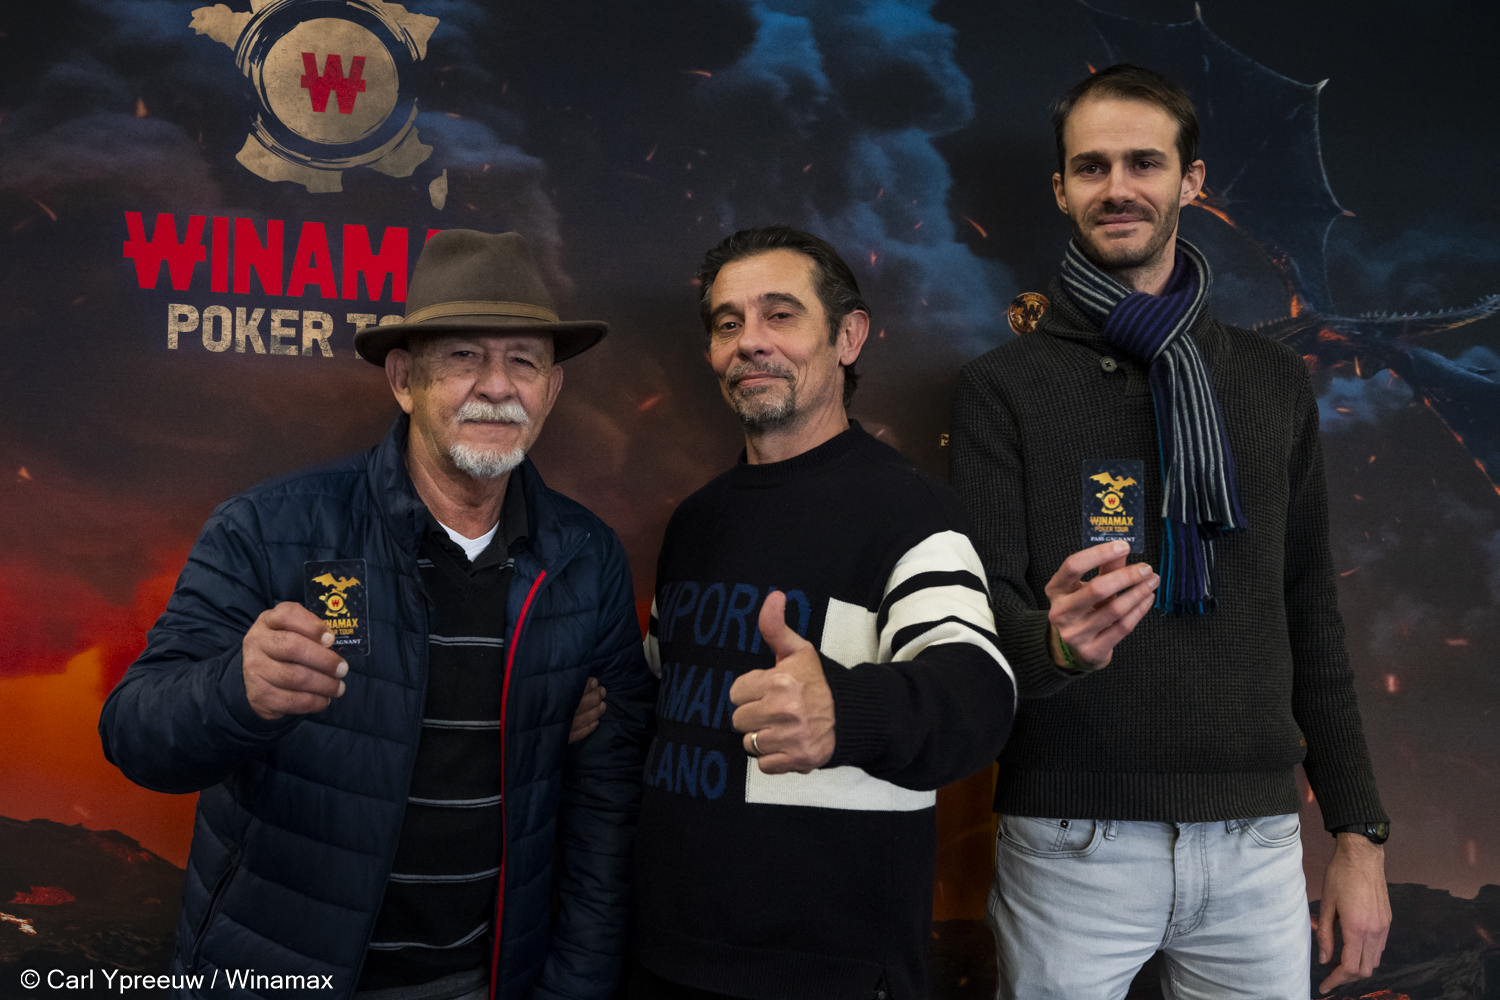 Winamax Poker Tour Poitiers